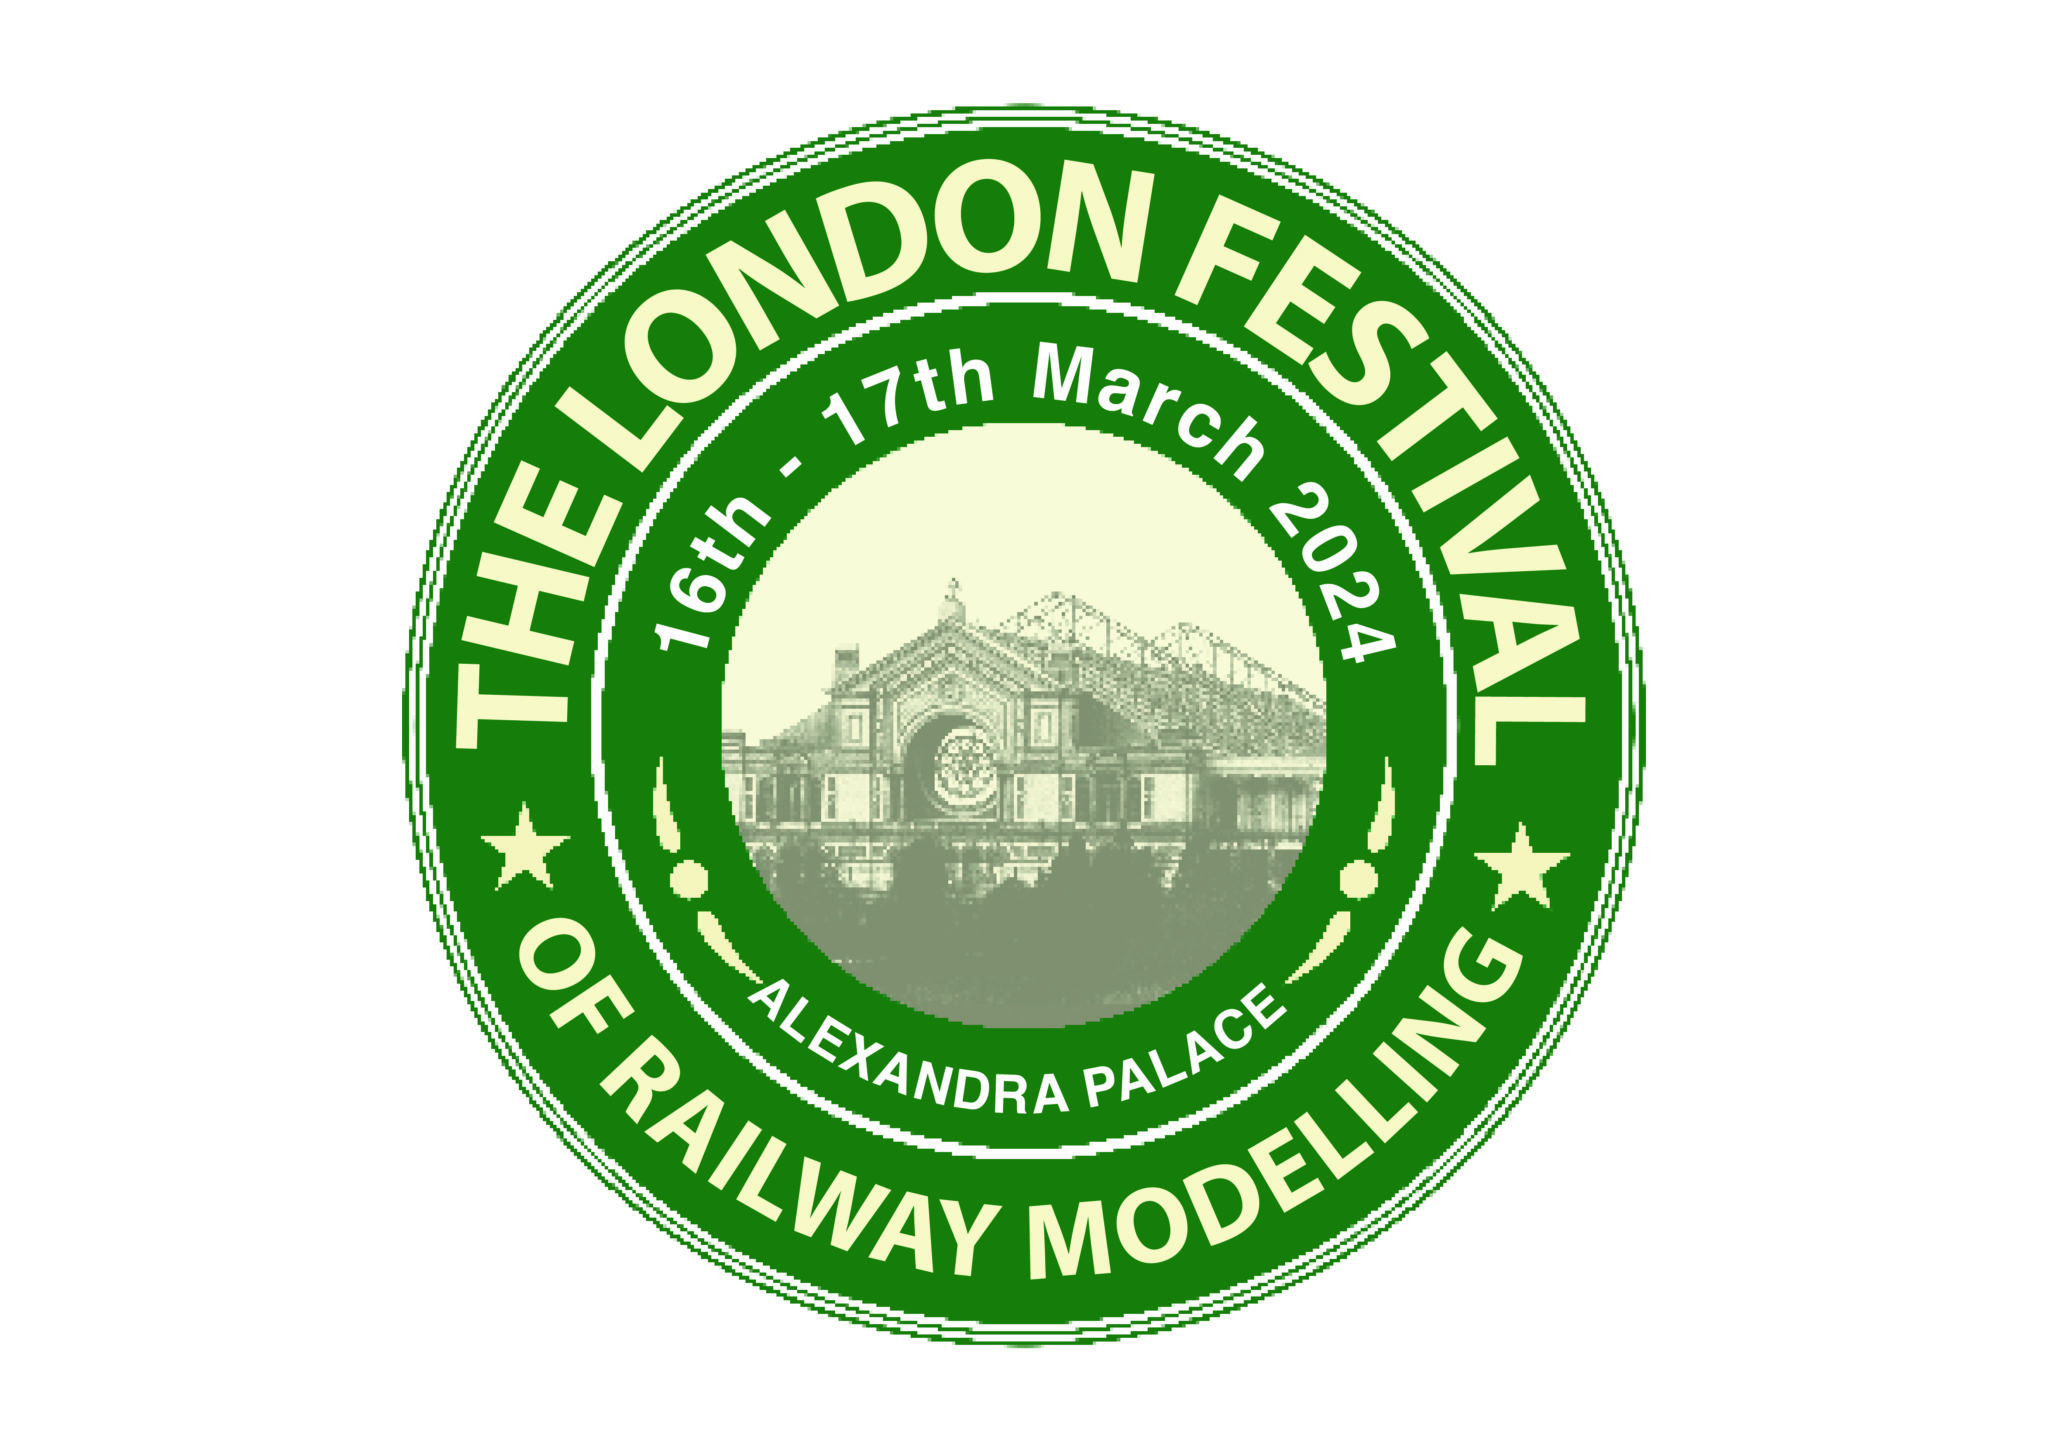 London Festival of Railway Modelling The Model Railway Club